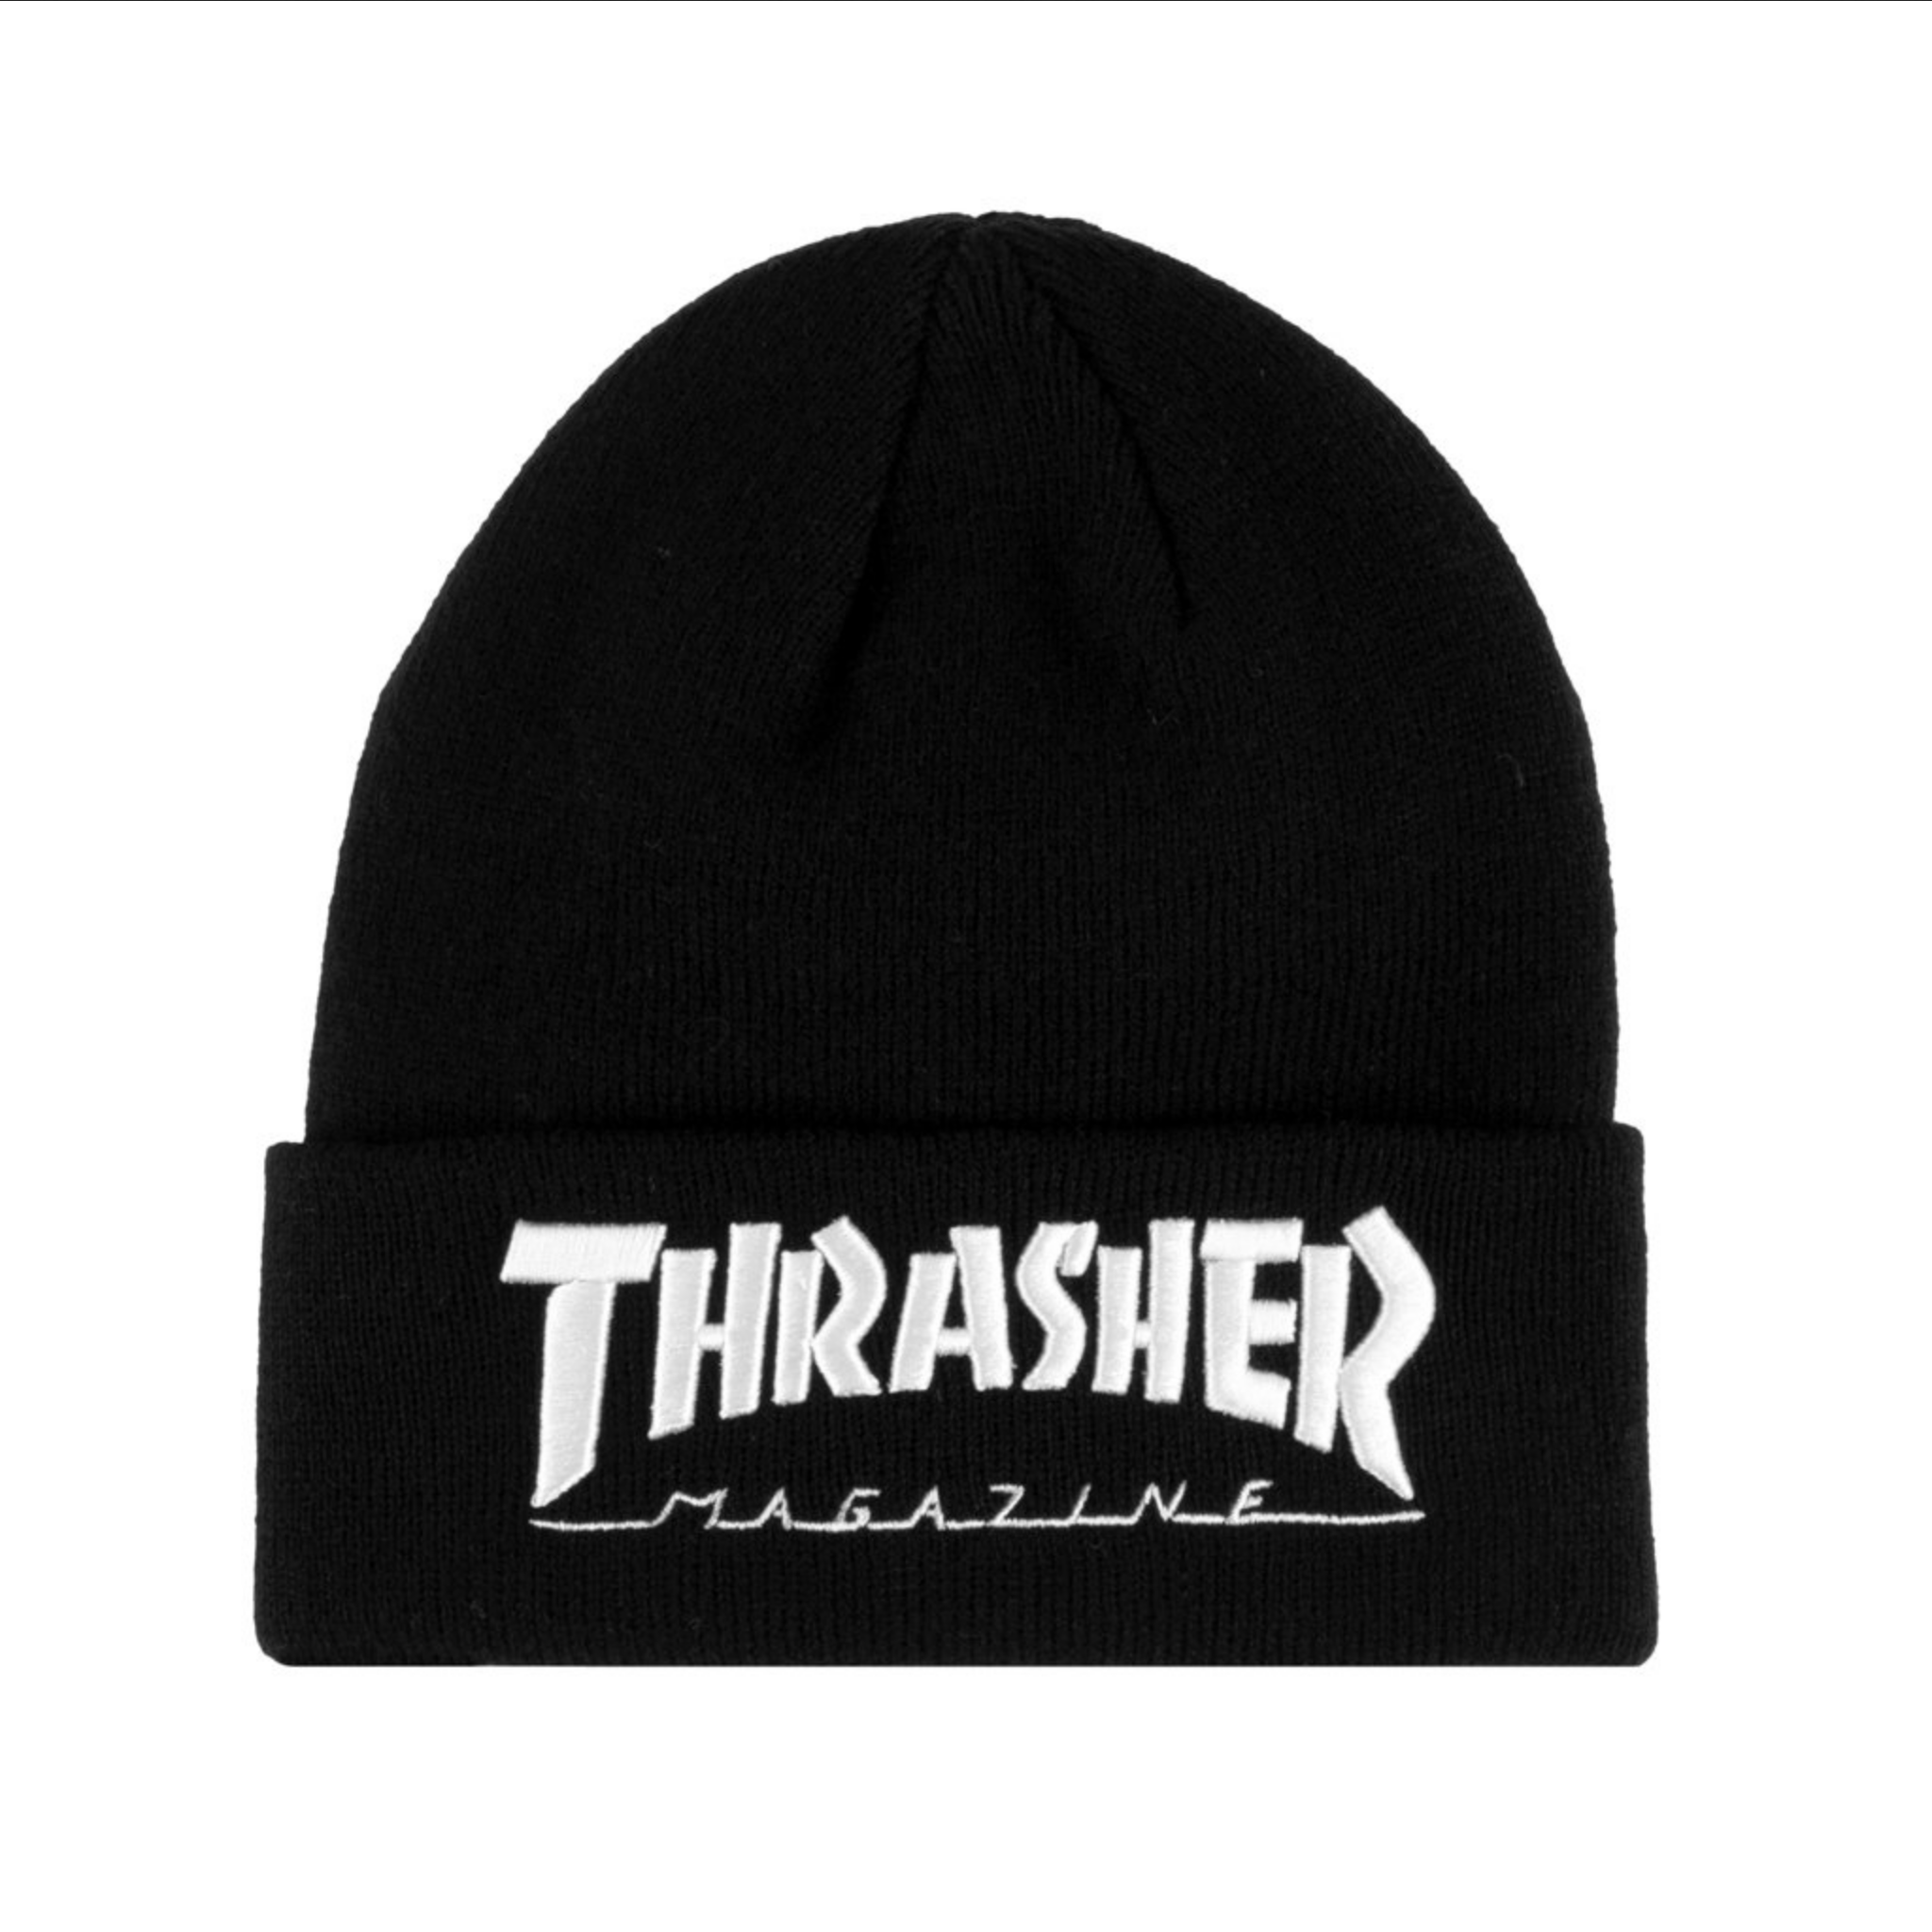 Thrasher Mag. Embroidered Logo Beanie Black/White